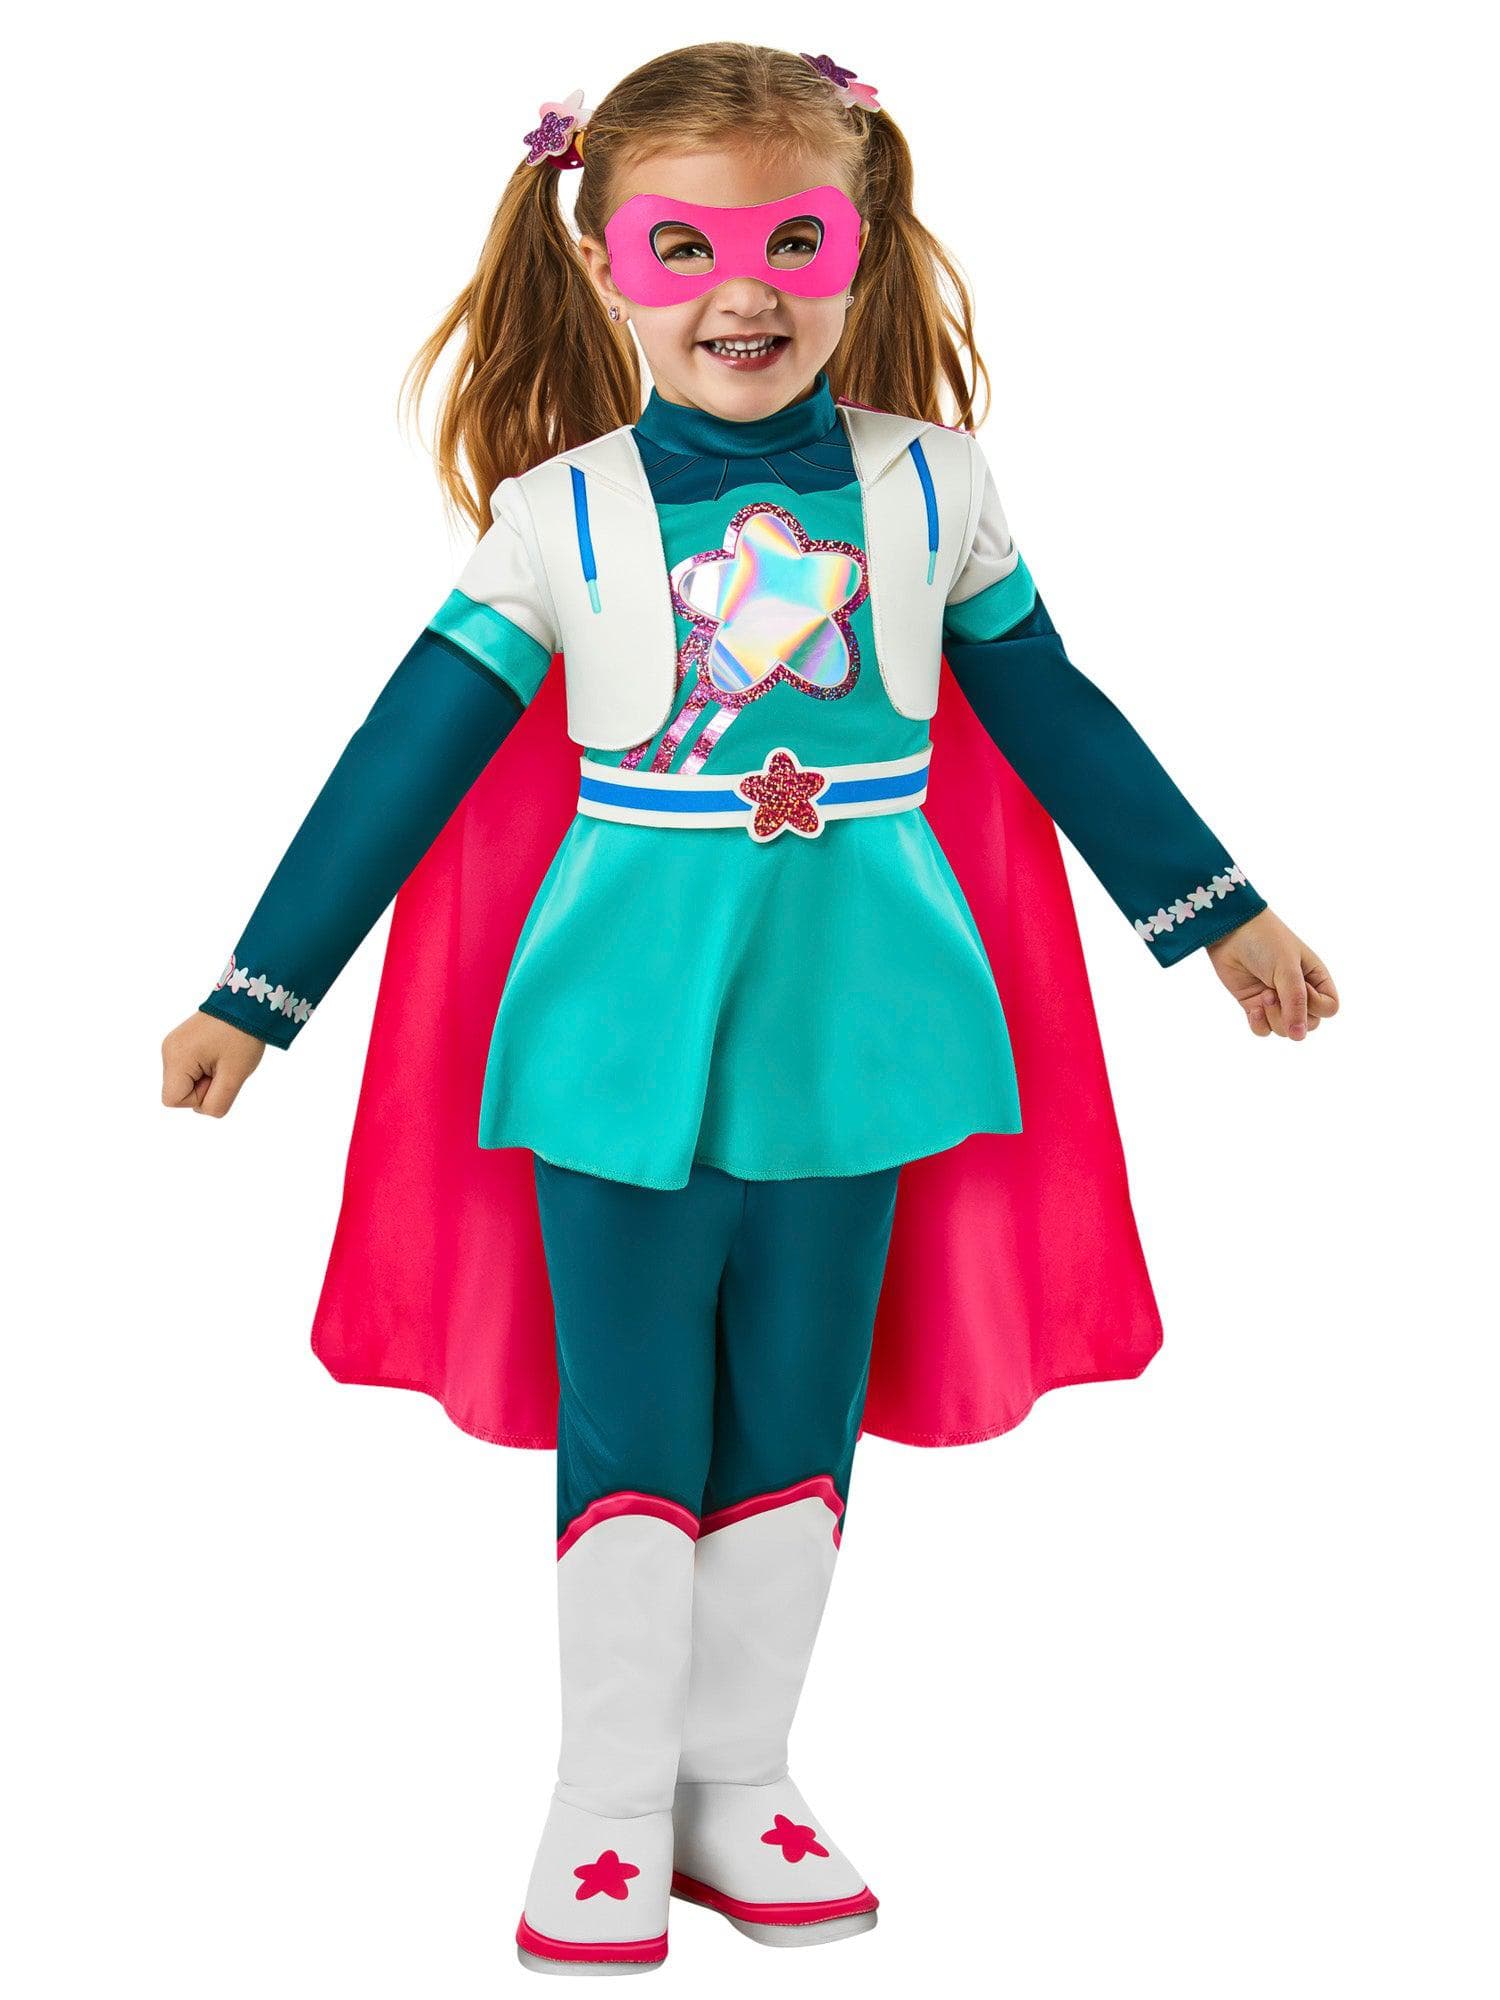 StarBeam Toddler Costume - costumes.com